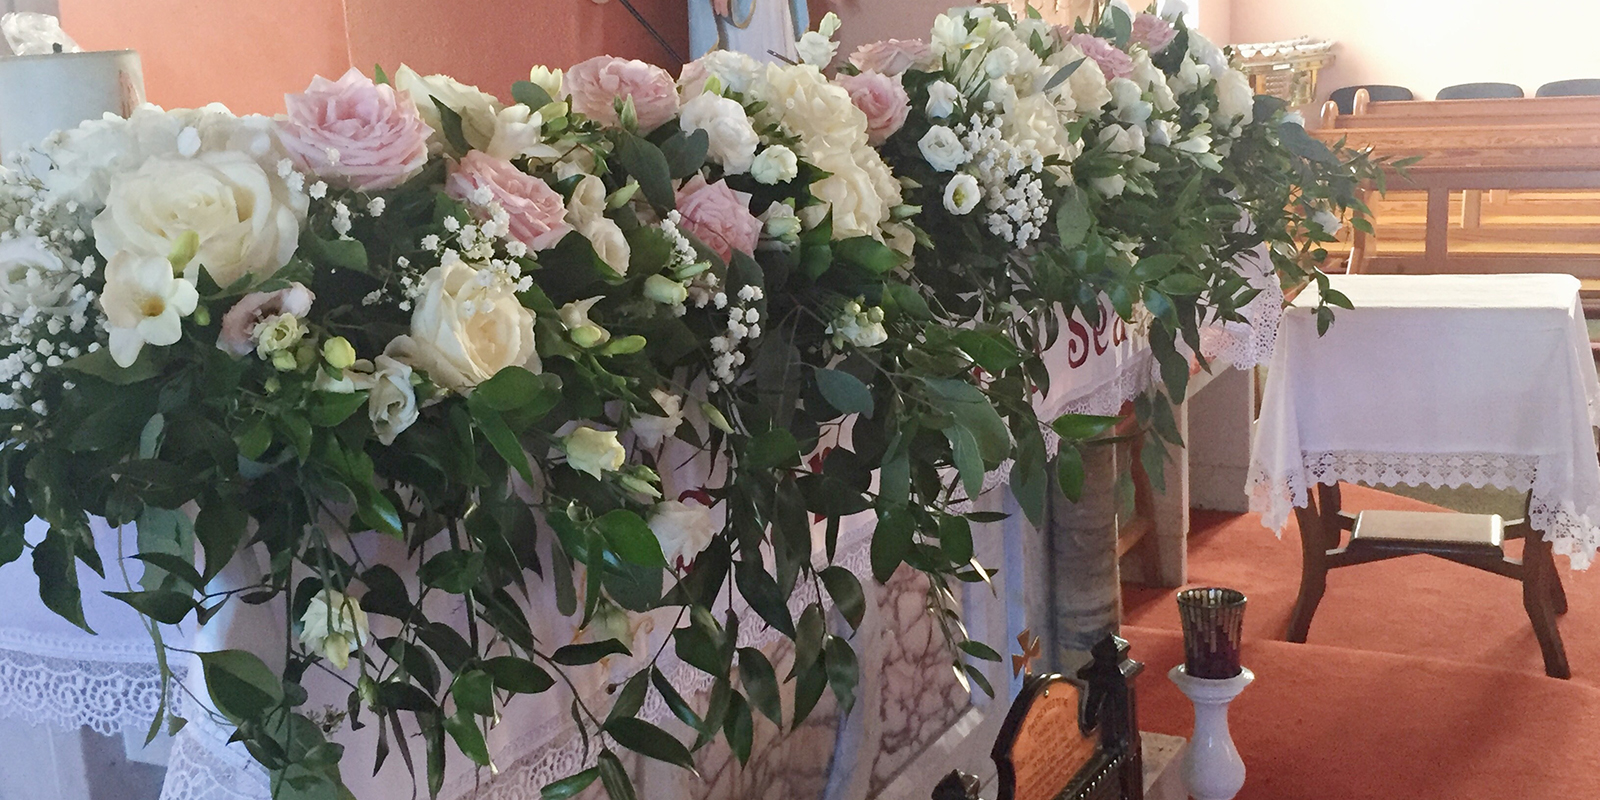 Wedding flowers by The Flower Den